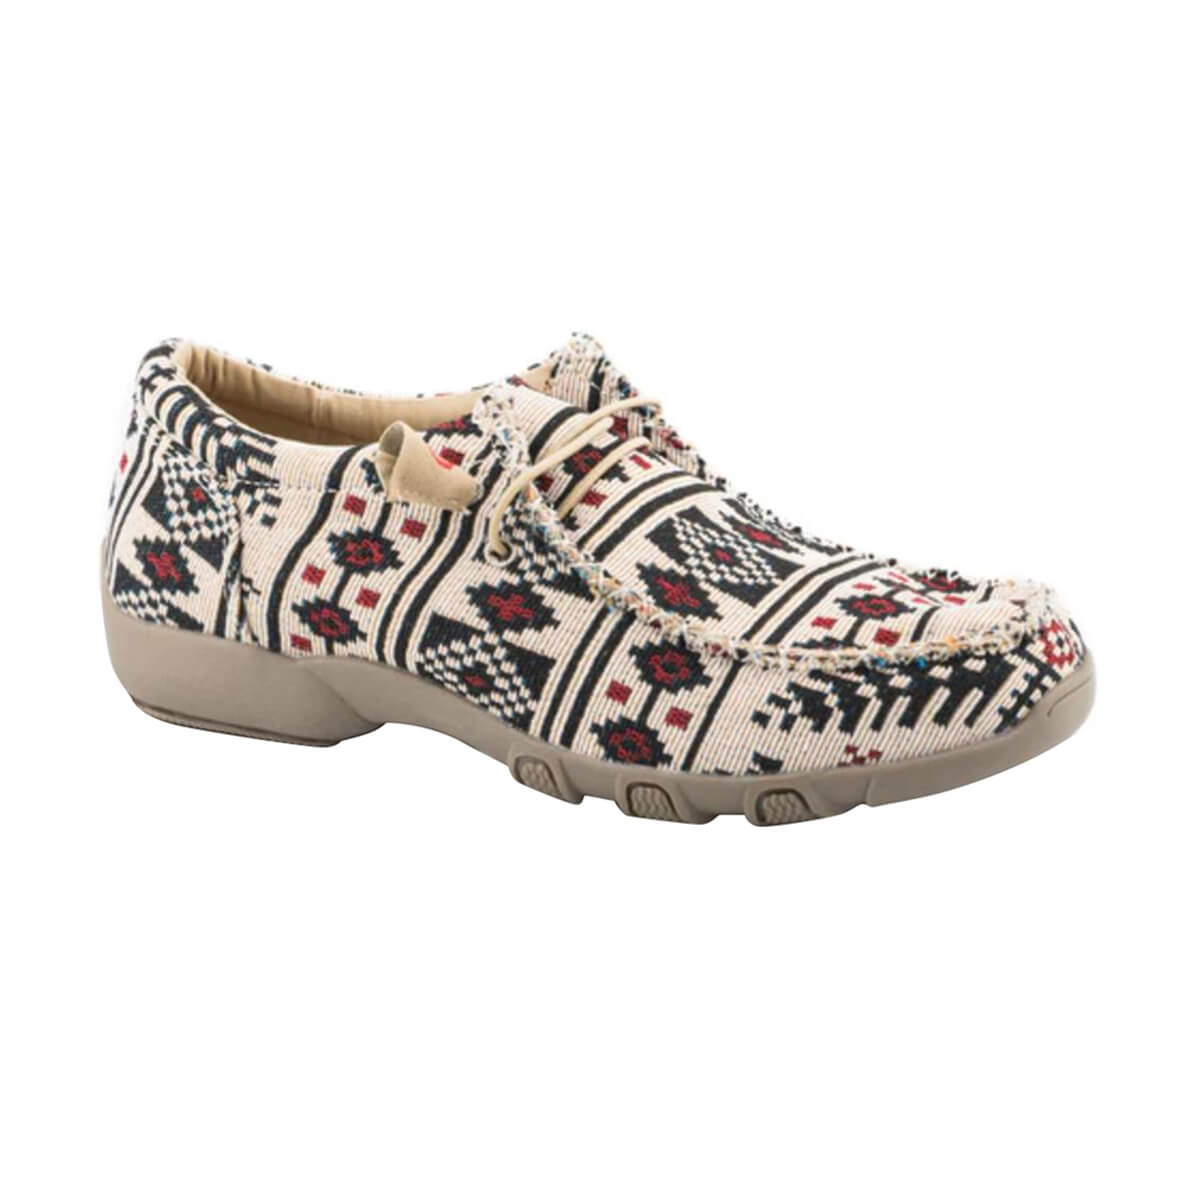 Roper Womens Fabric Chillin Aztec Chukka Oxford Shoes - Tan